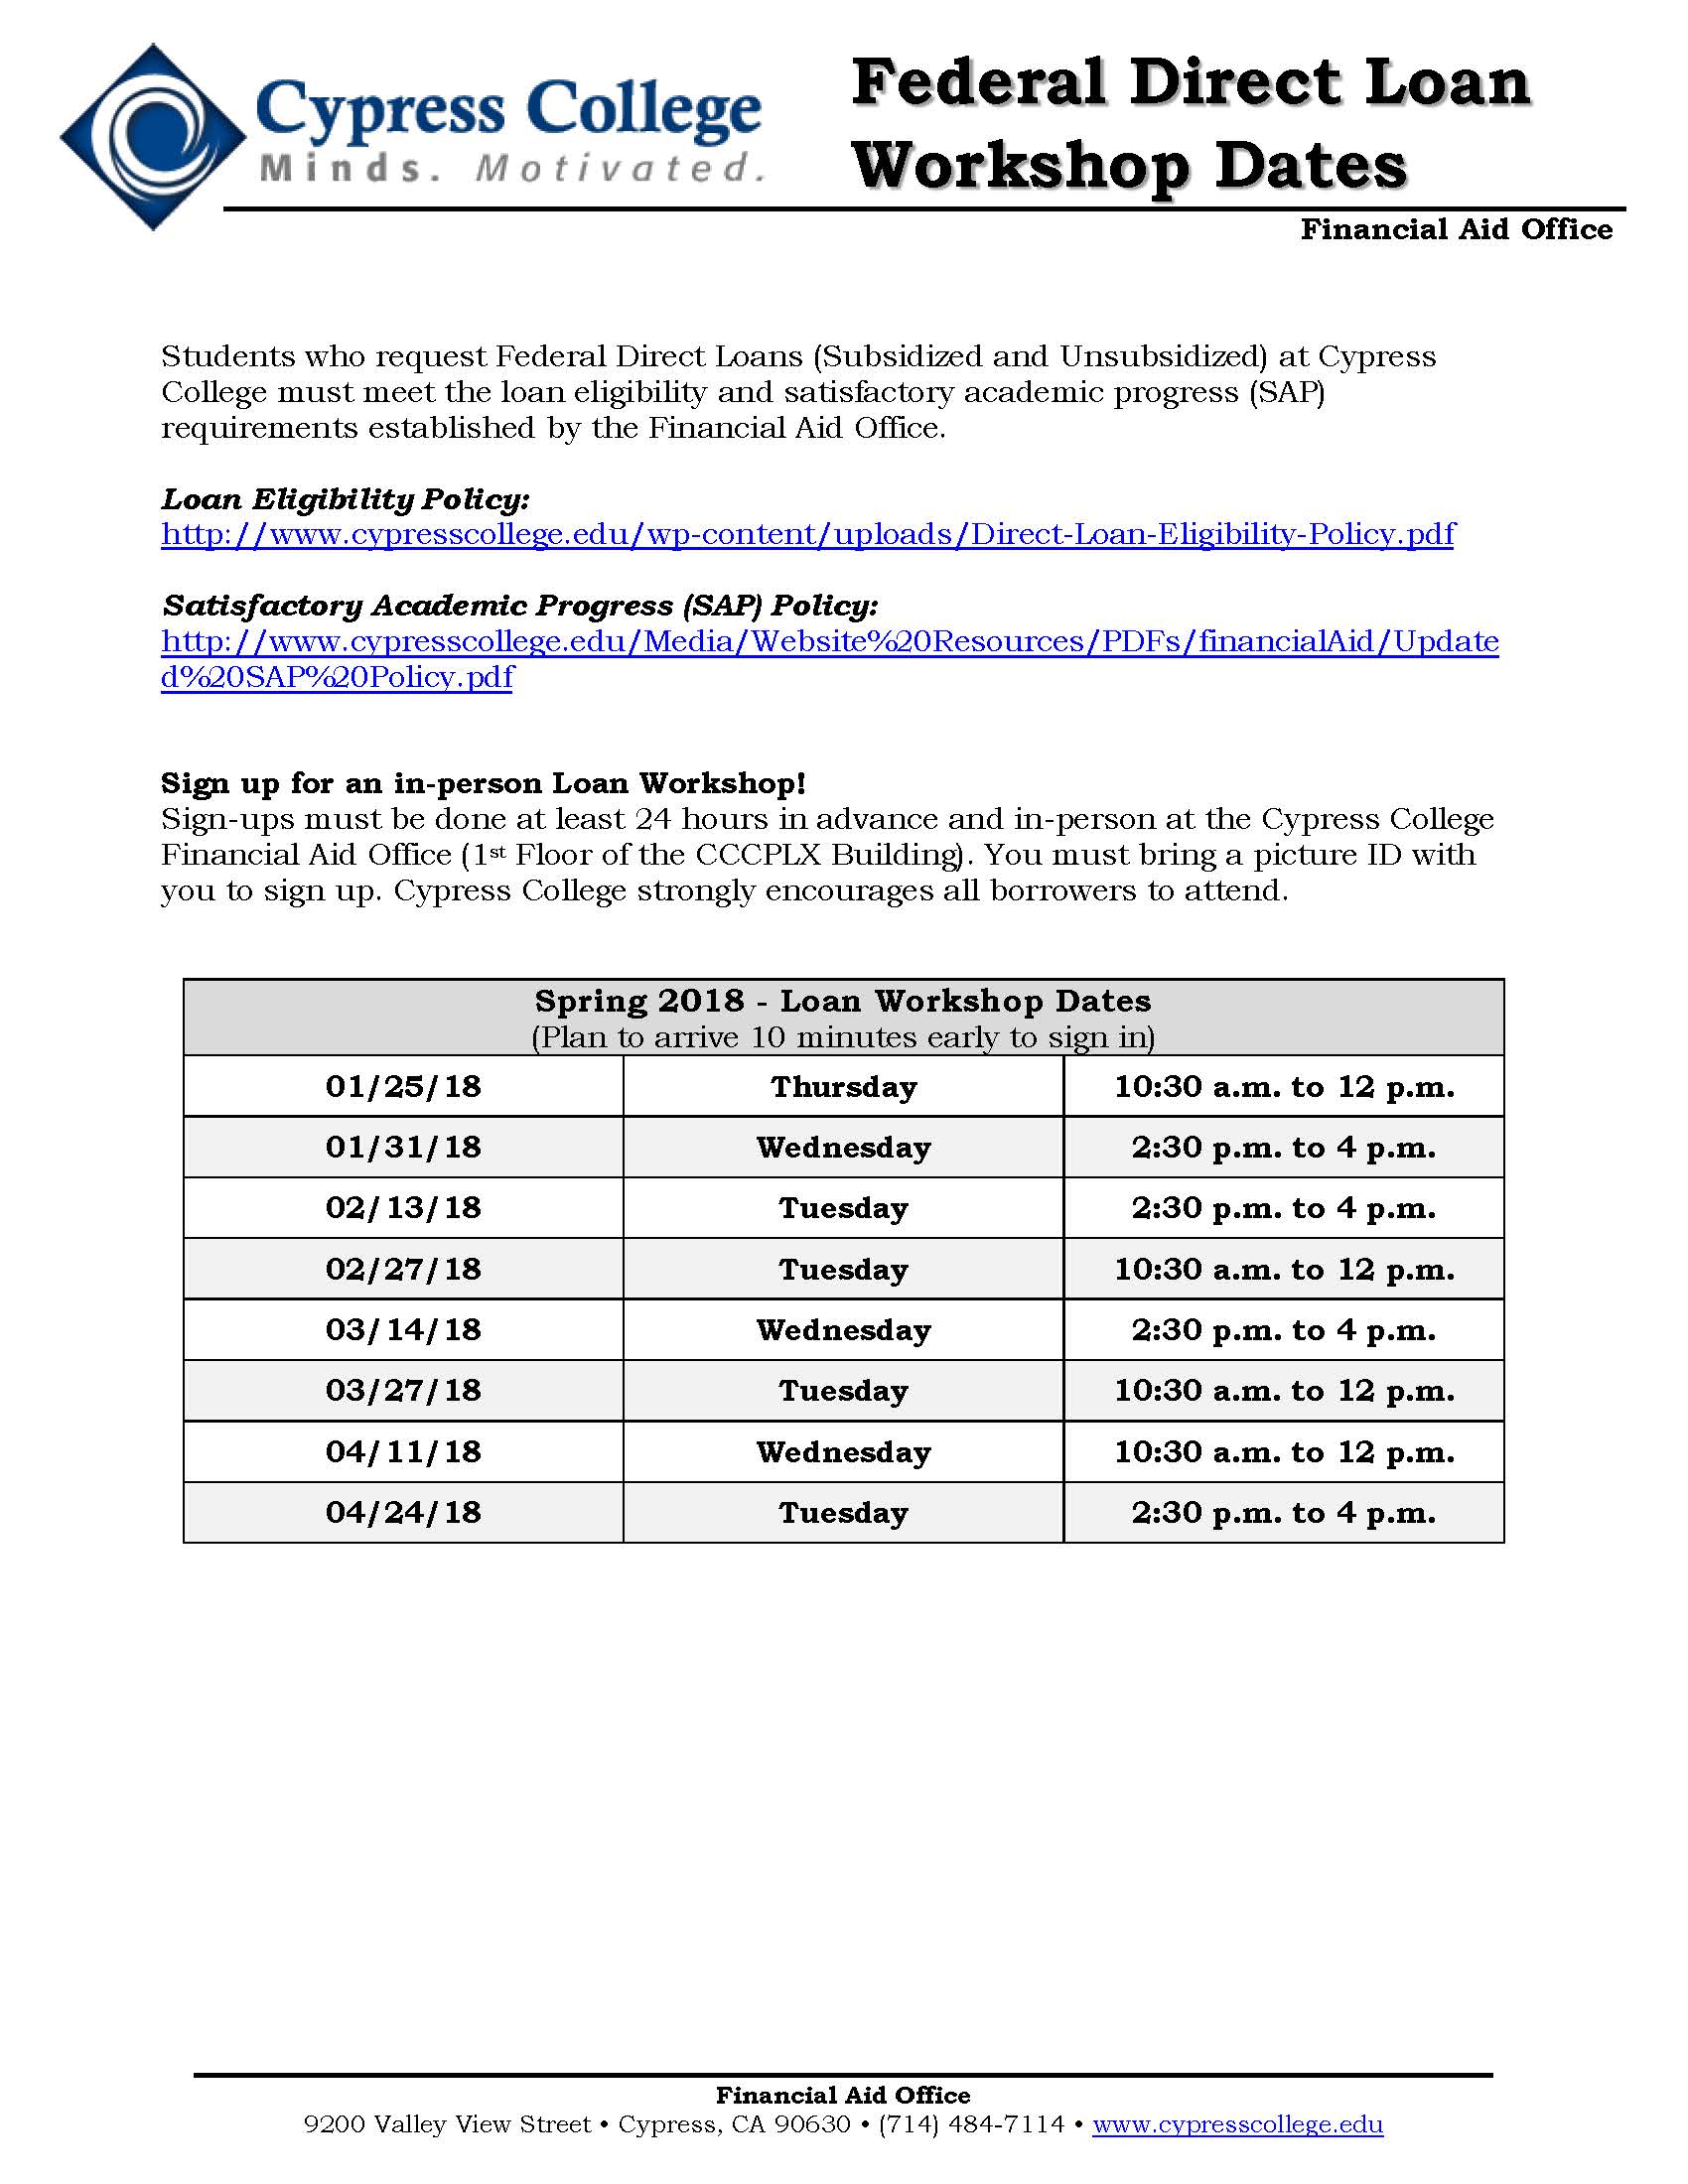 Federal Direct Loan Workshop Disbursement Dates